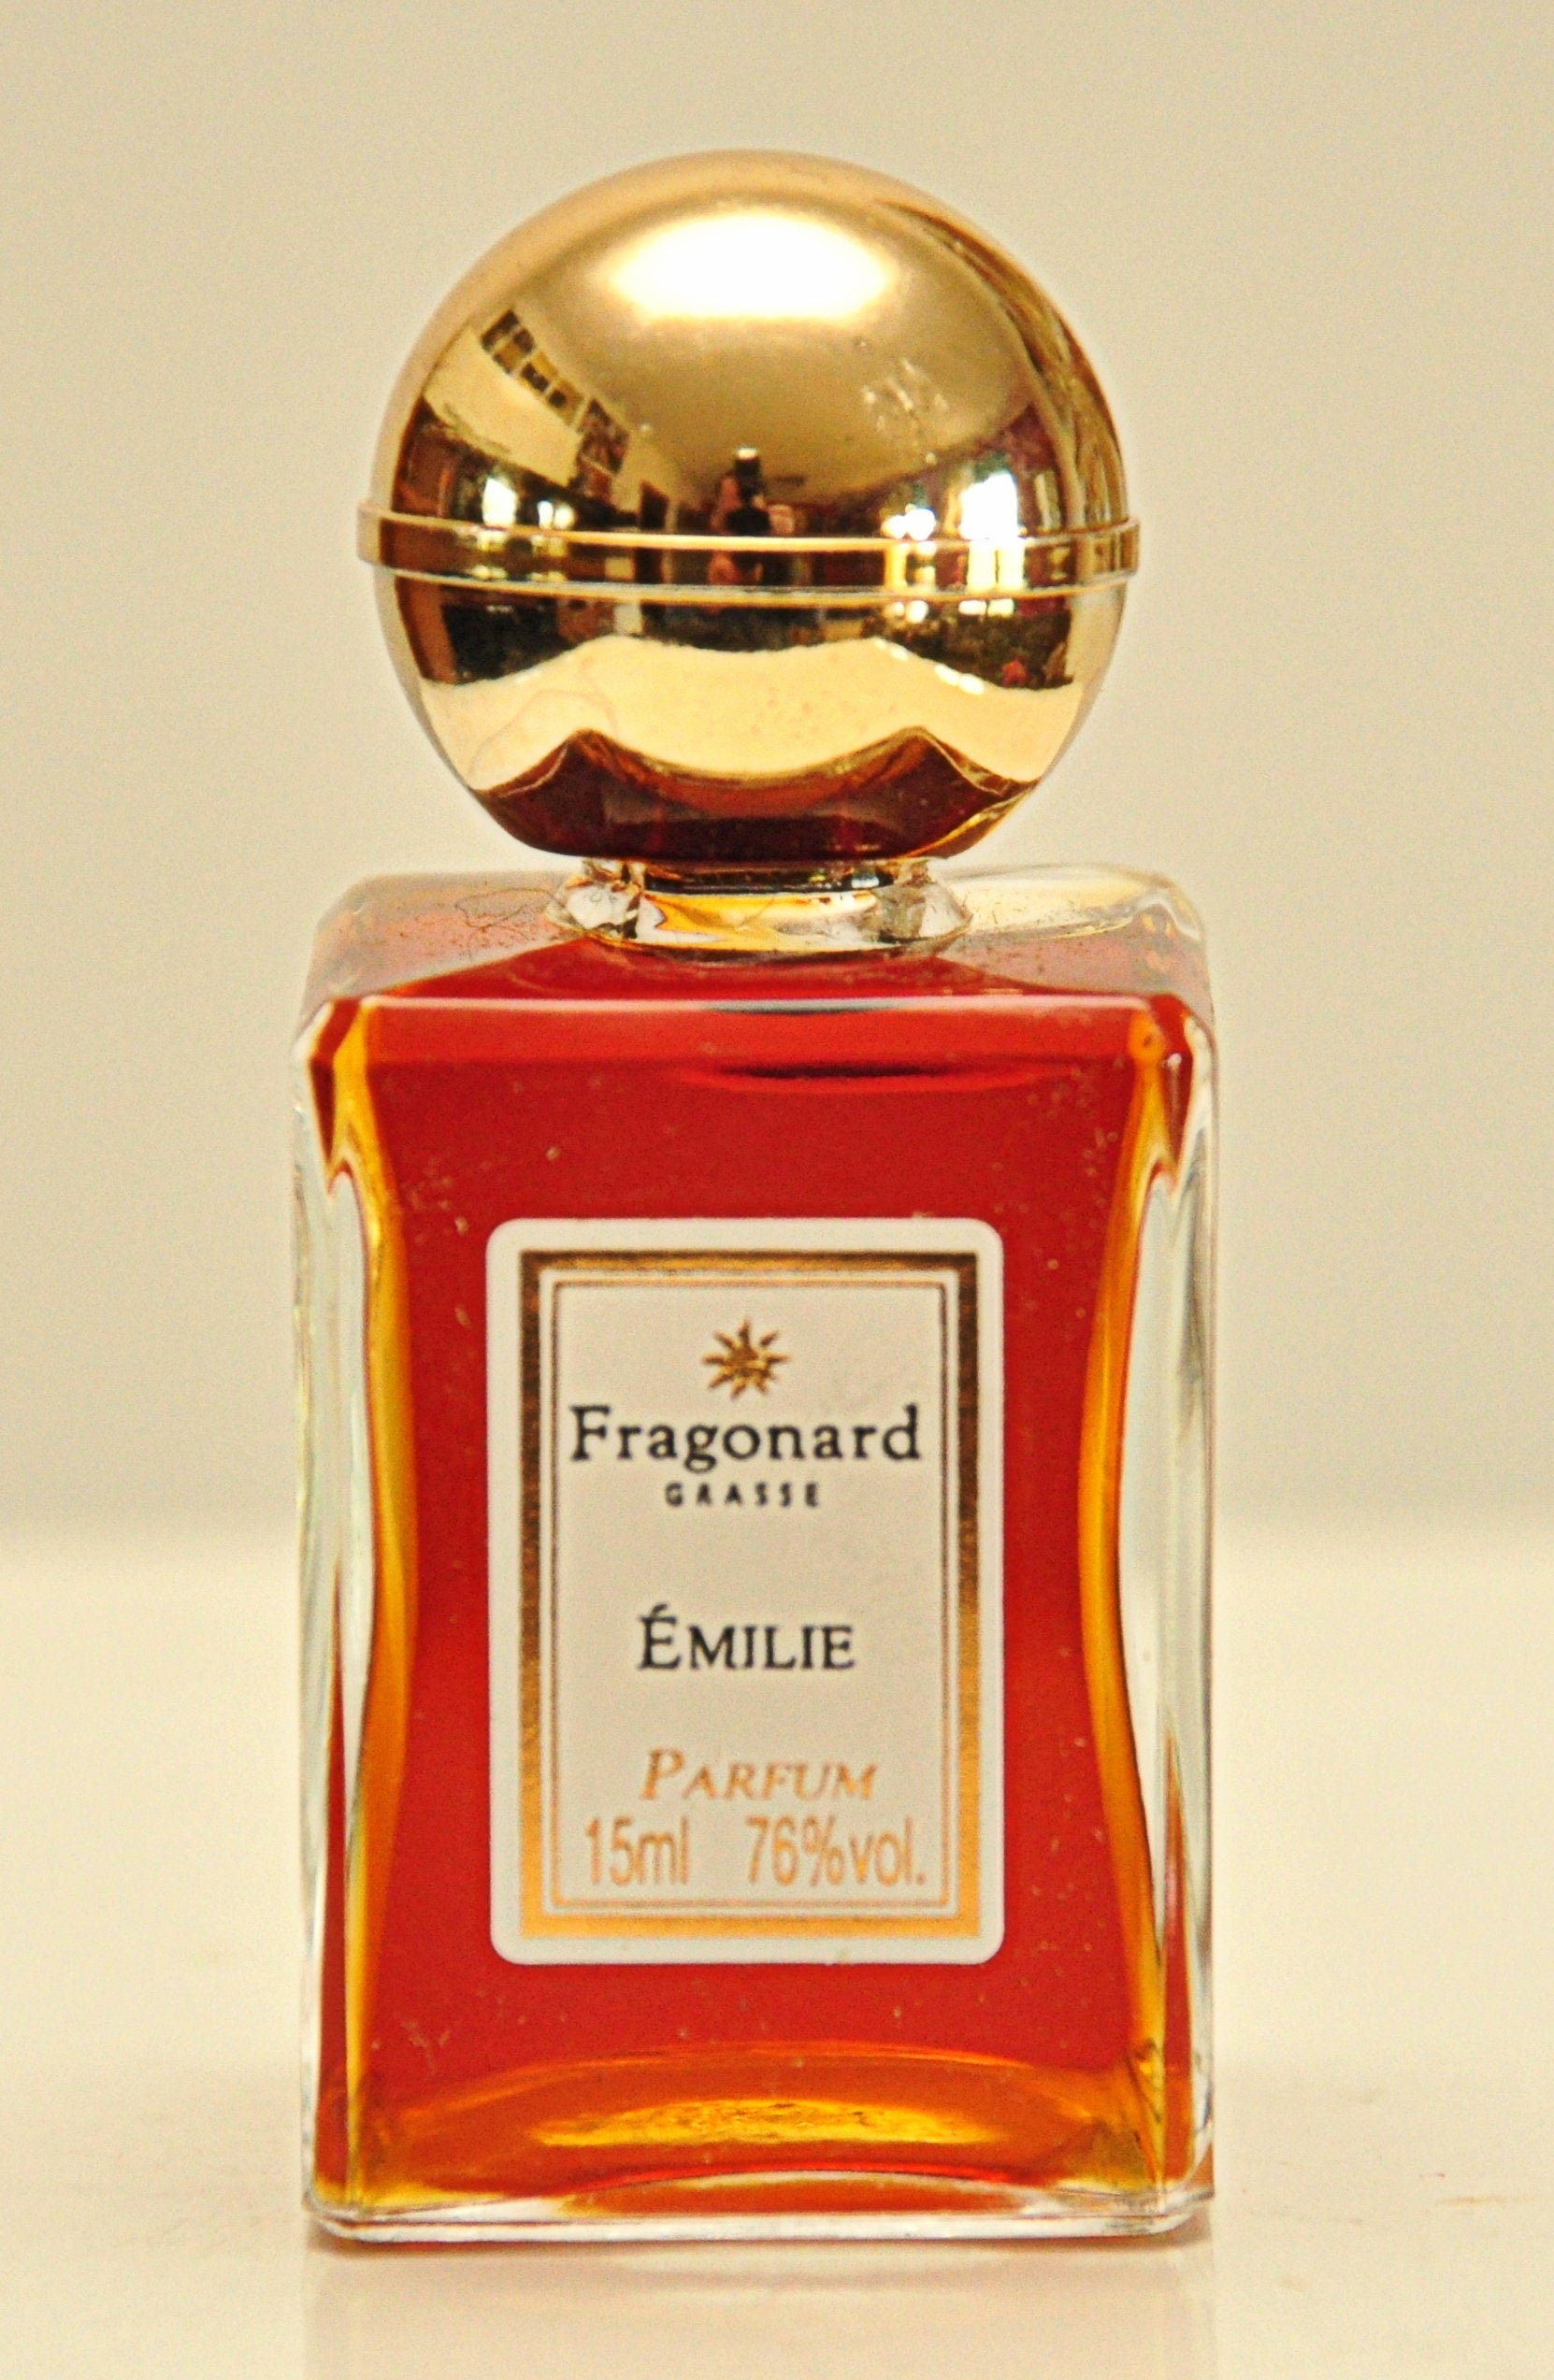 Fragonard Emilie Parfum 15ml 050 Fl. Oz. Splash Not Spray 